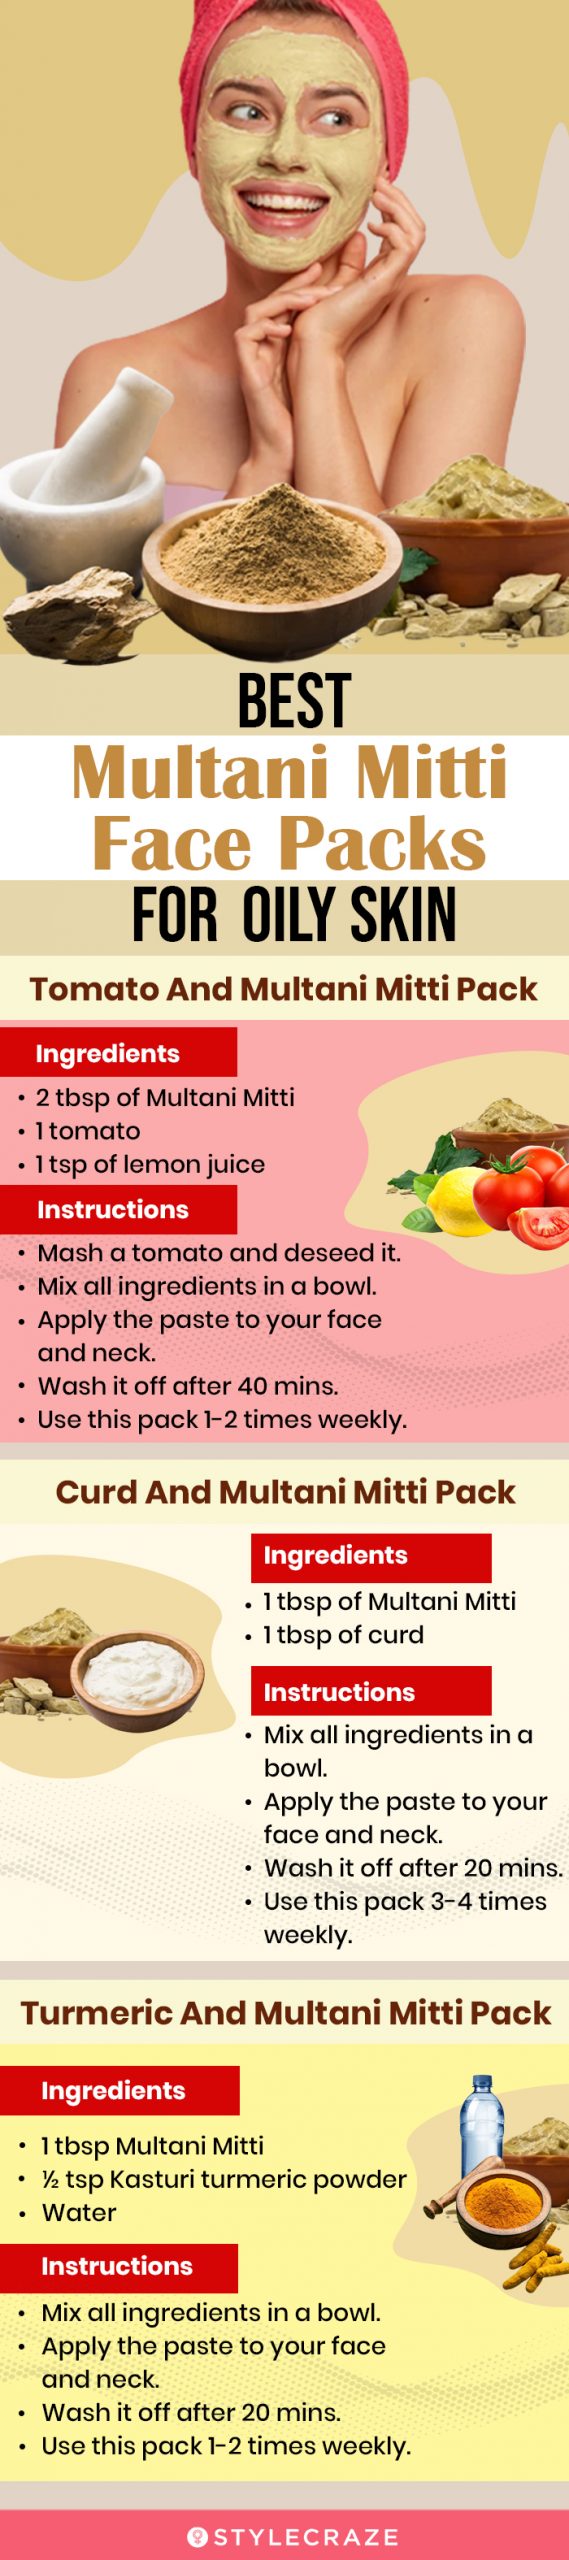 best multani mitti face packs for oily skin [infographic]